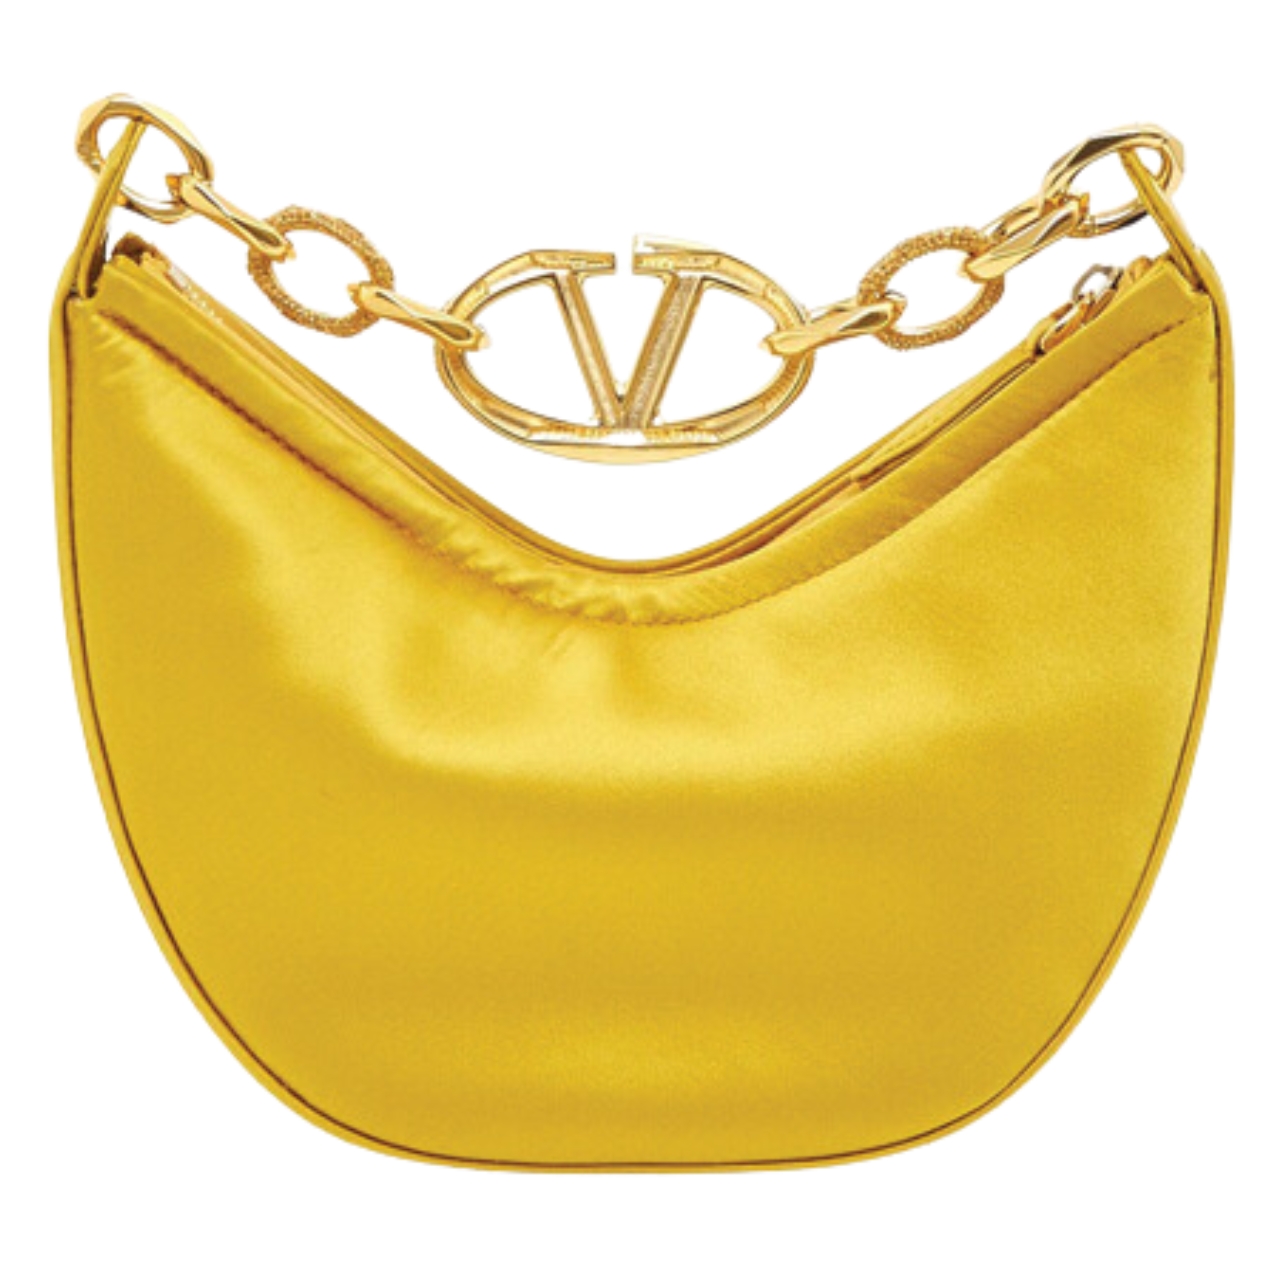 Valentino Garavani yellow bag with gold chain handle